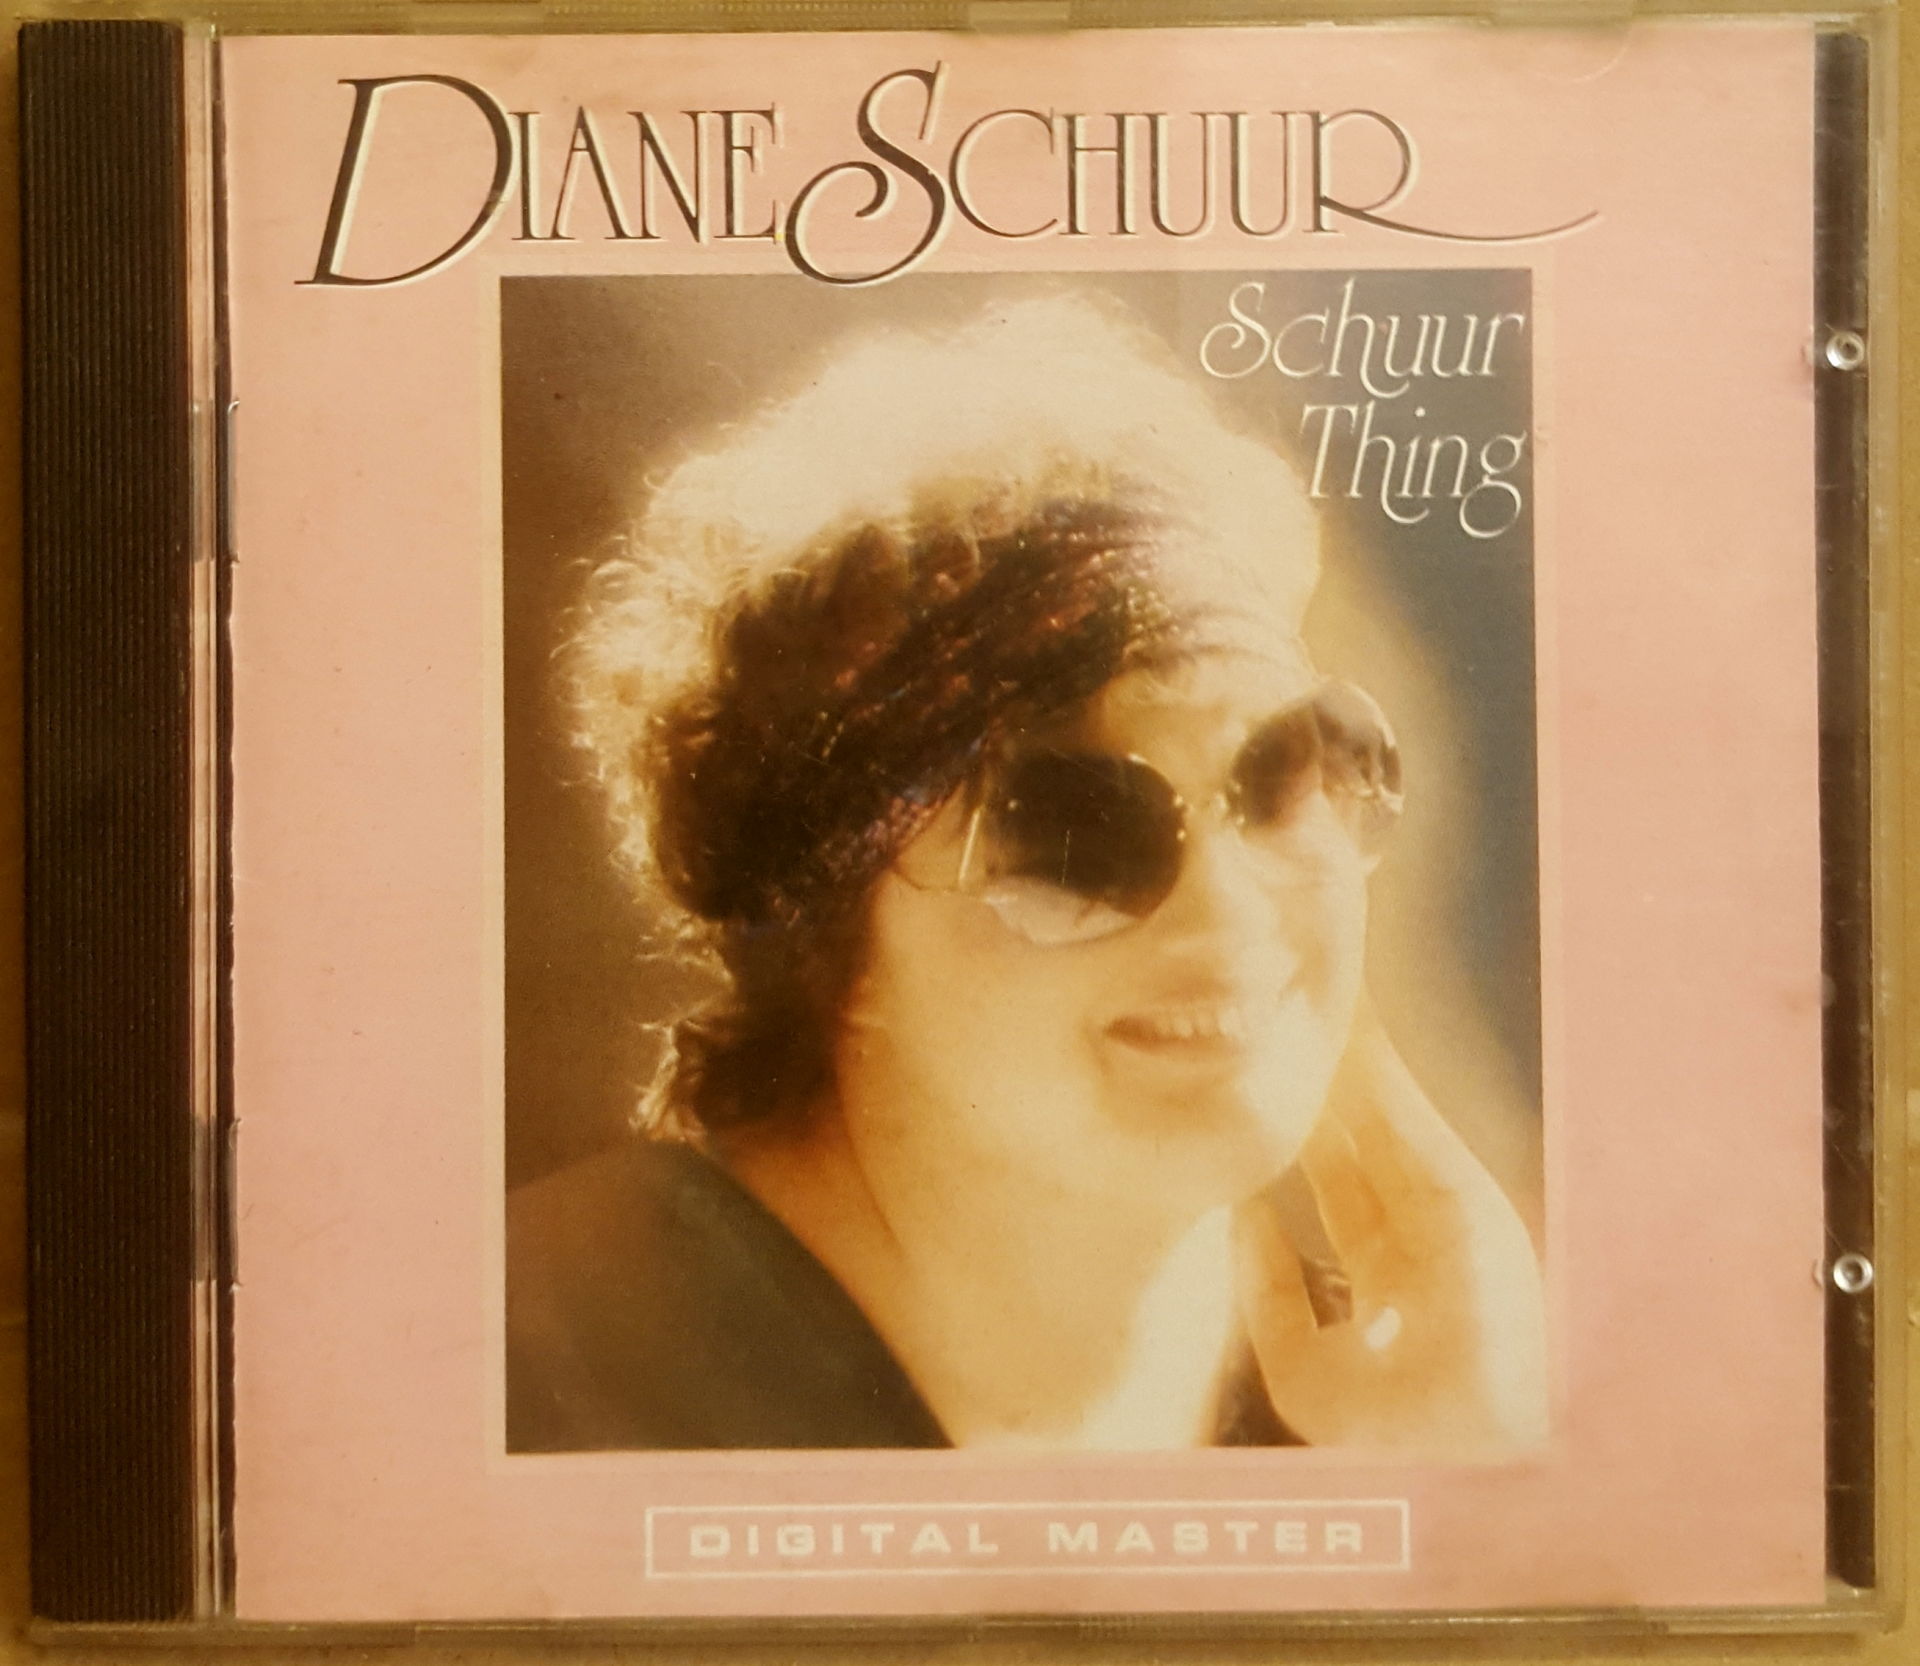 DIANE SCHUUR - SCHUUR THINGS (1985) - CD GRP DAVE GRUISIN STAN GETZ JOSE FELICIANO 2.EL